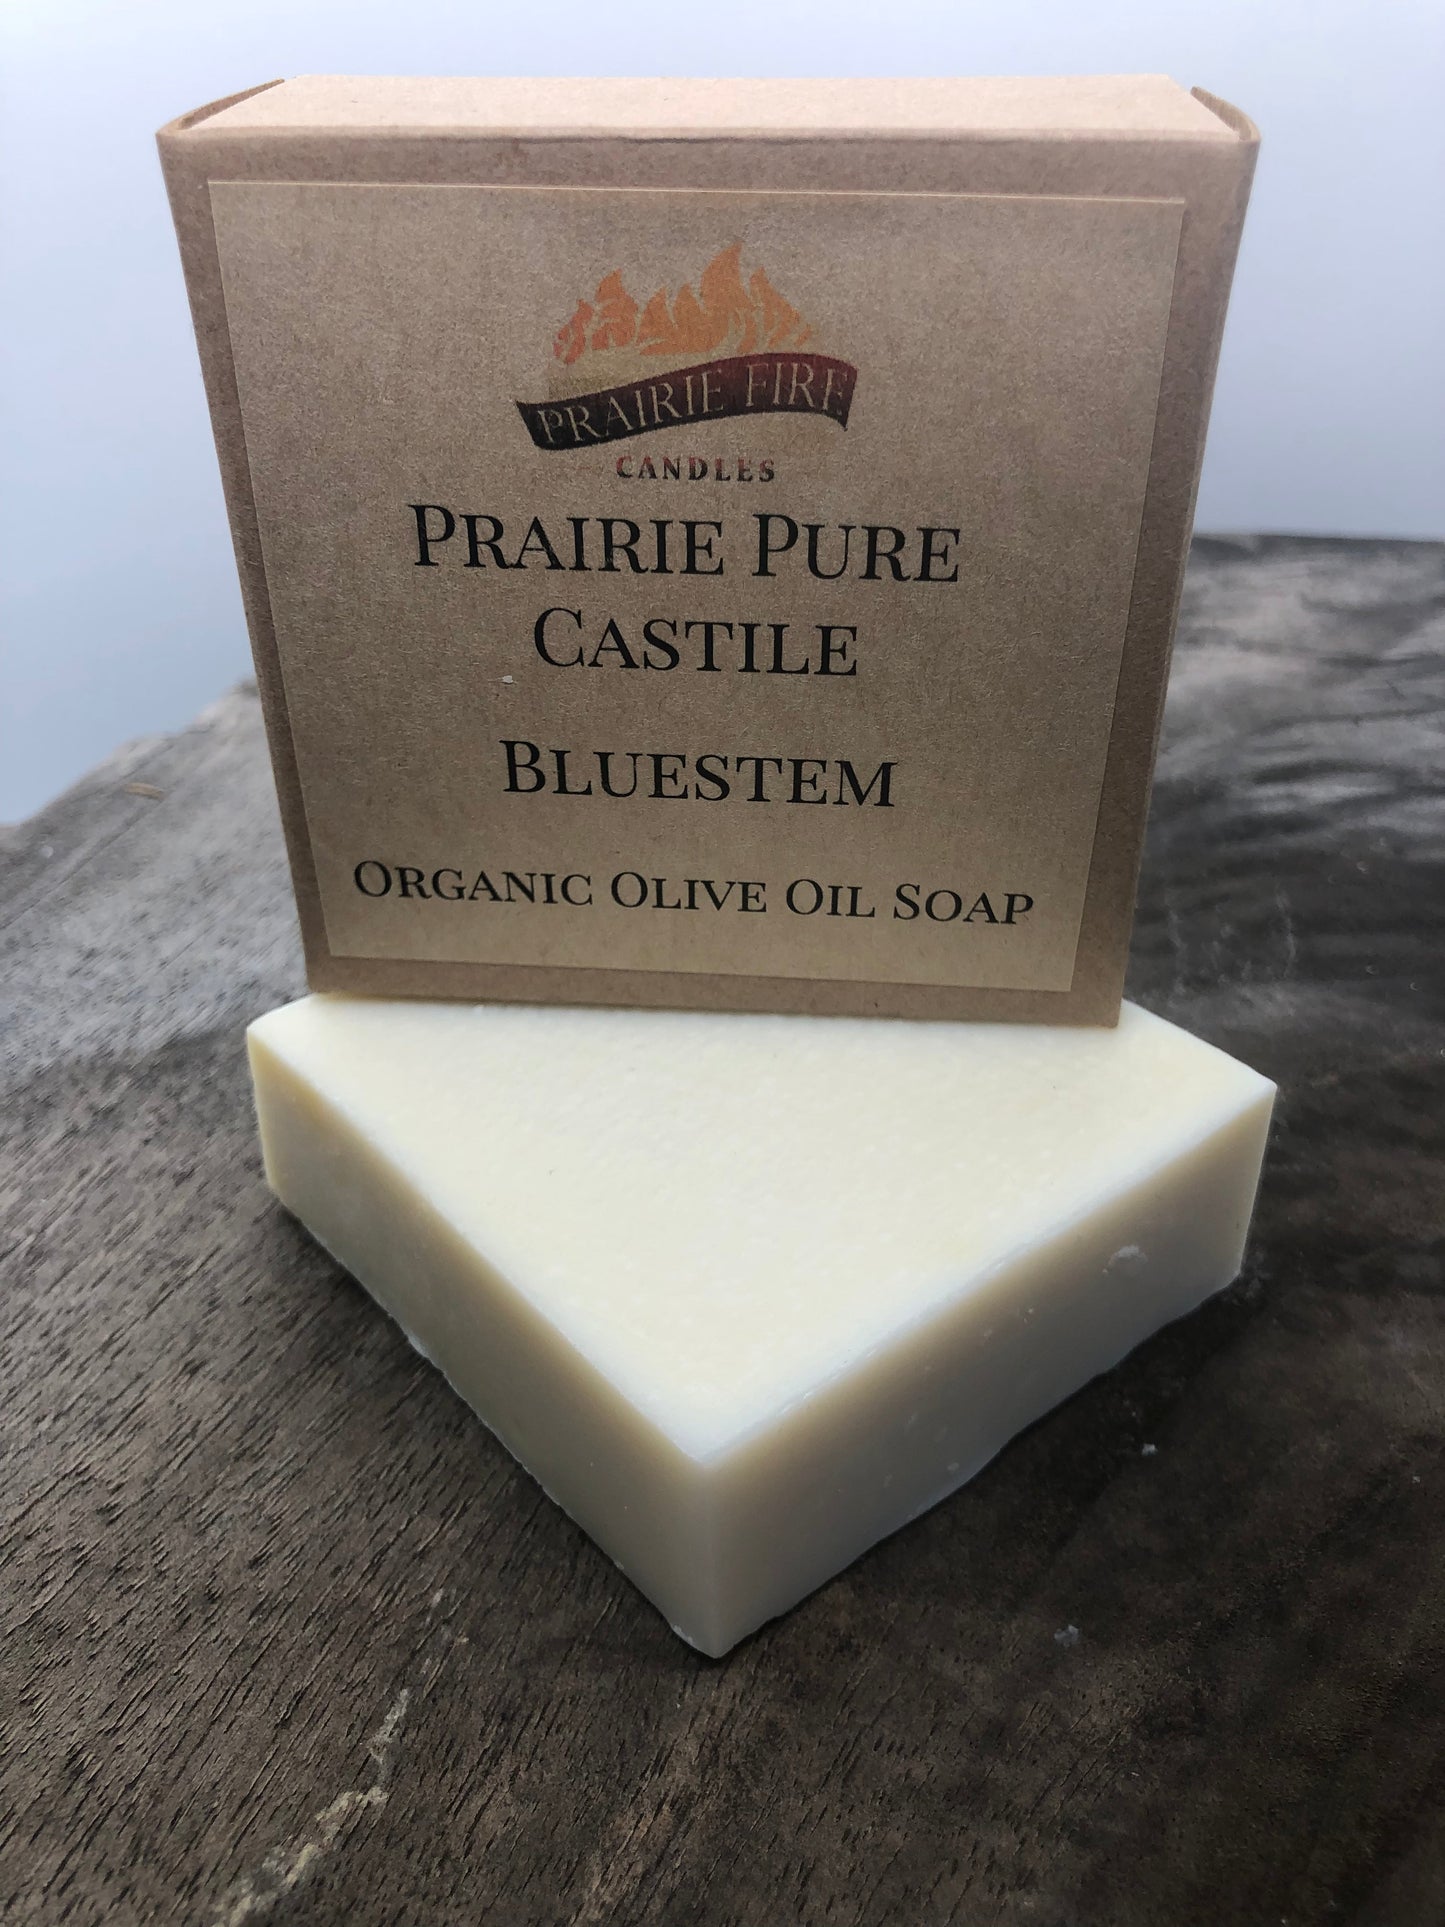 Bluestem Real Castile Organic Olive Oil Soap for Sensitive Skin - Dye Free - 100% Certified Organic Extra Virgin Olive Oil